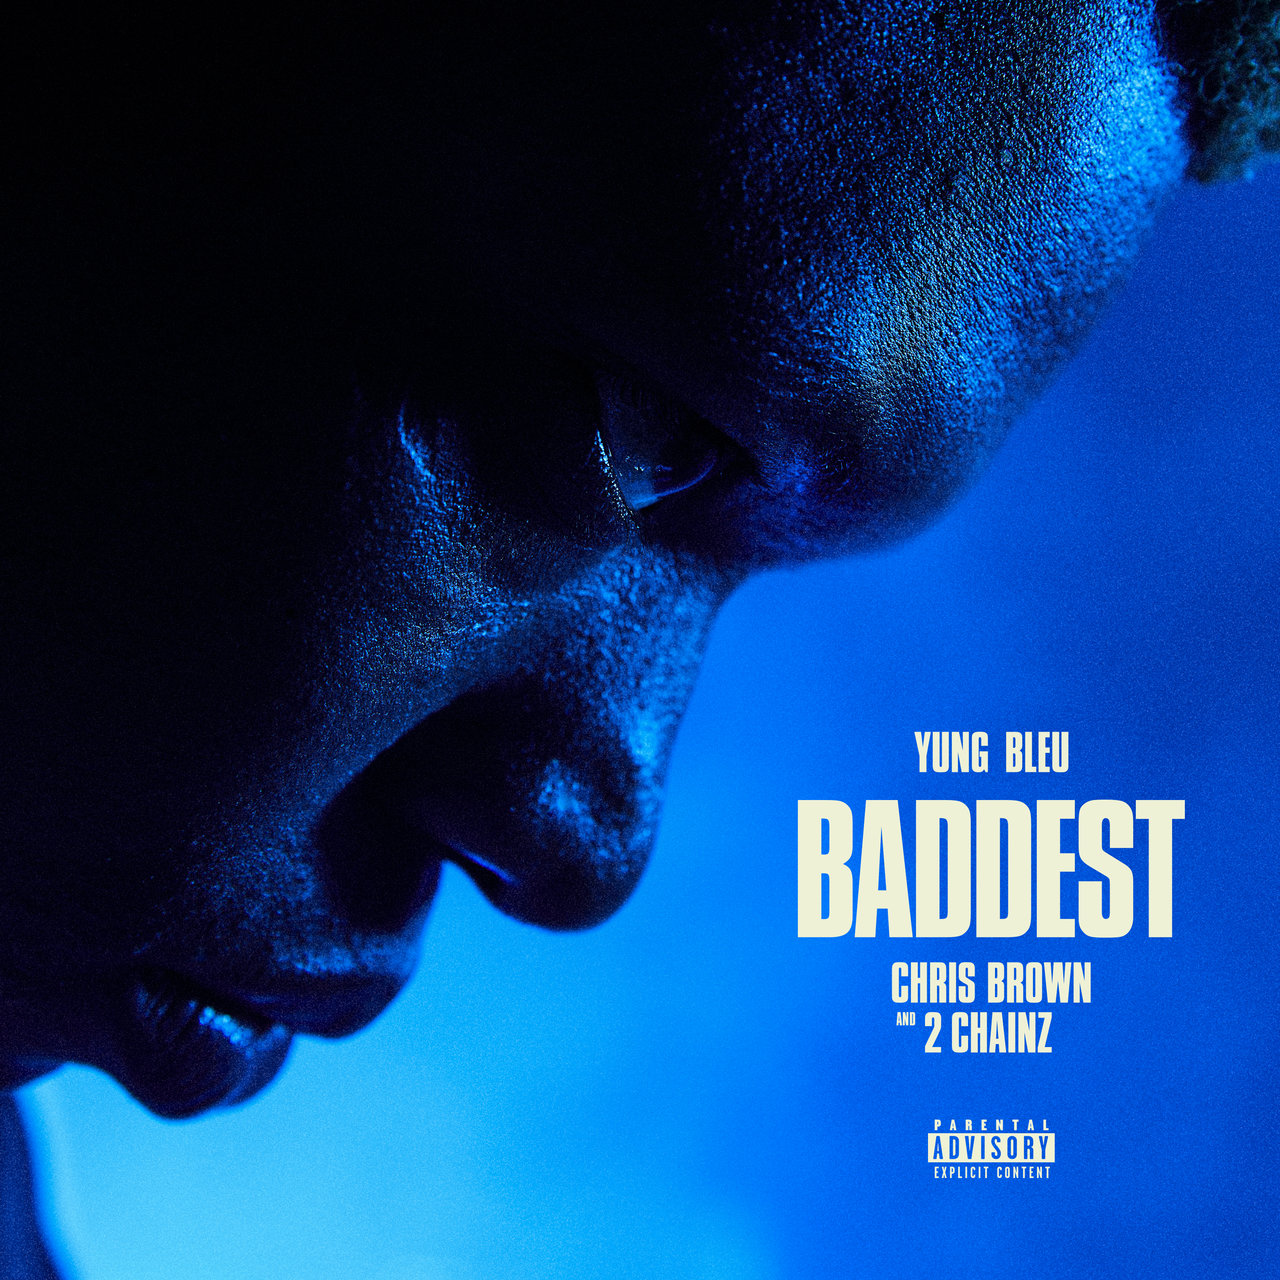 Yung Bleu - Baddest (ft. Chris Brown and 2 Chainz) (Cover)